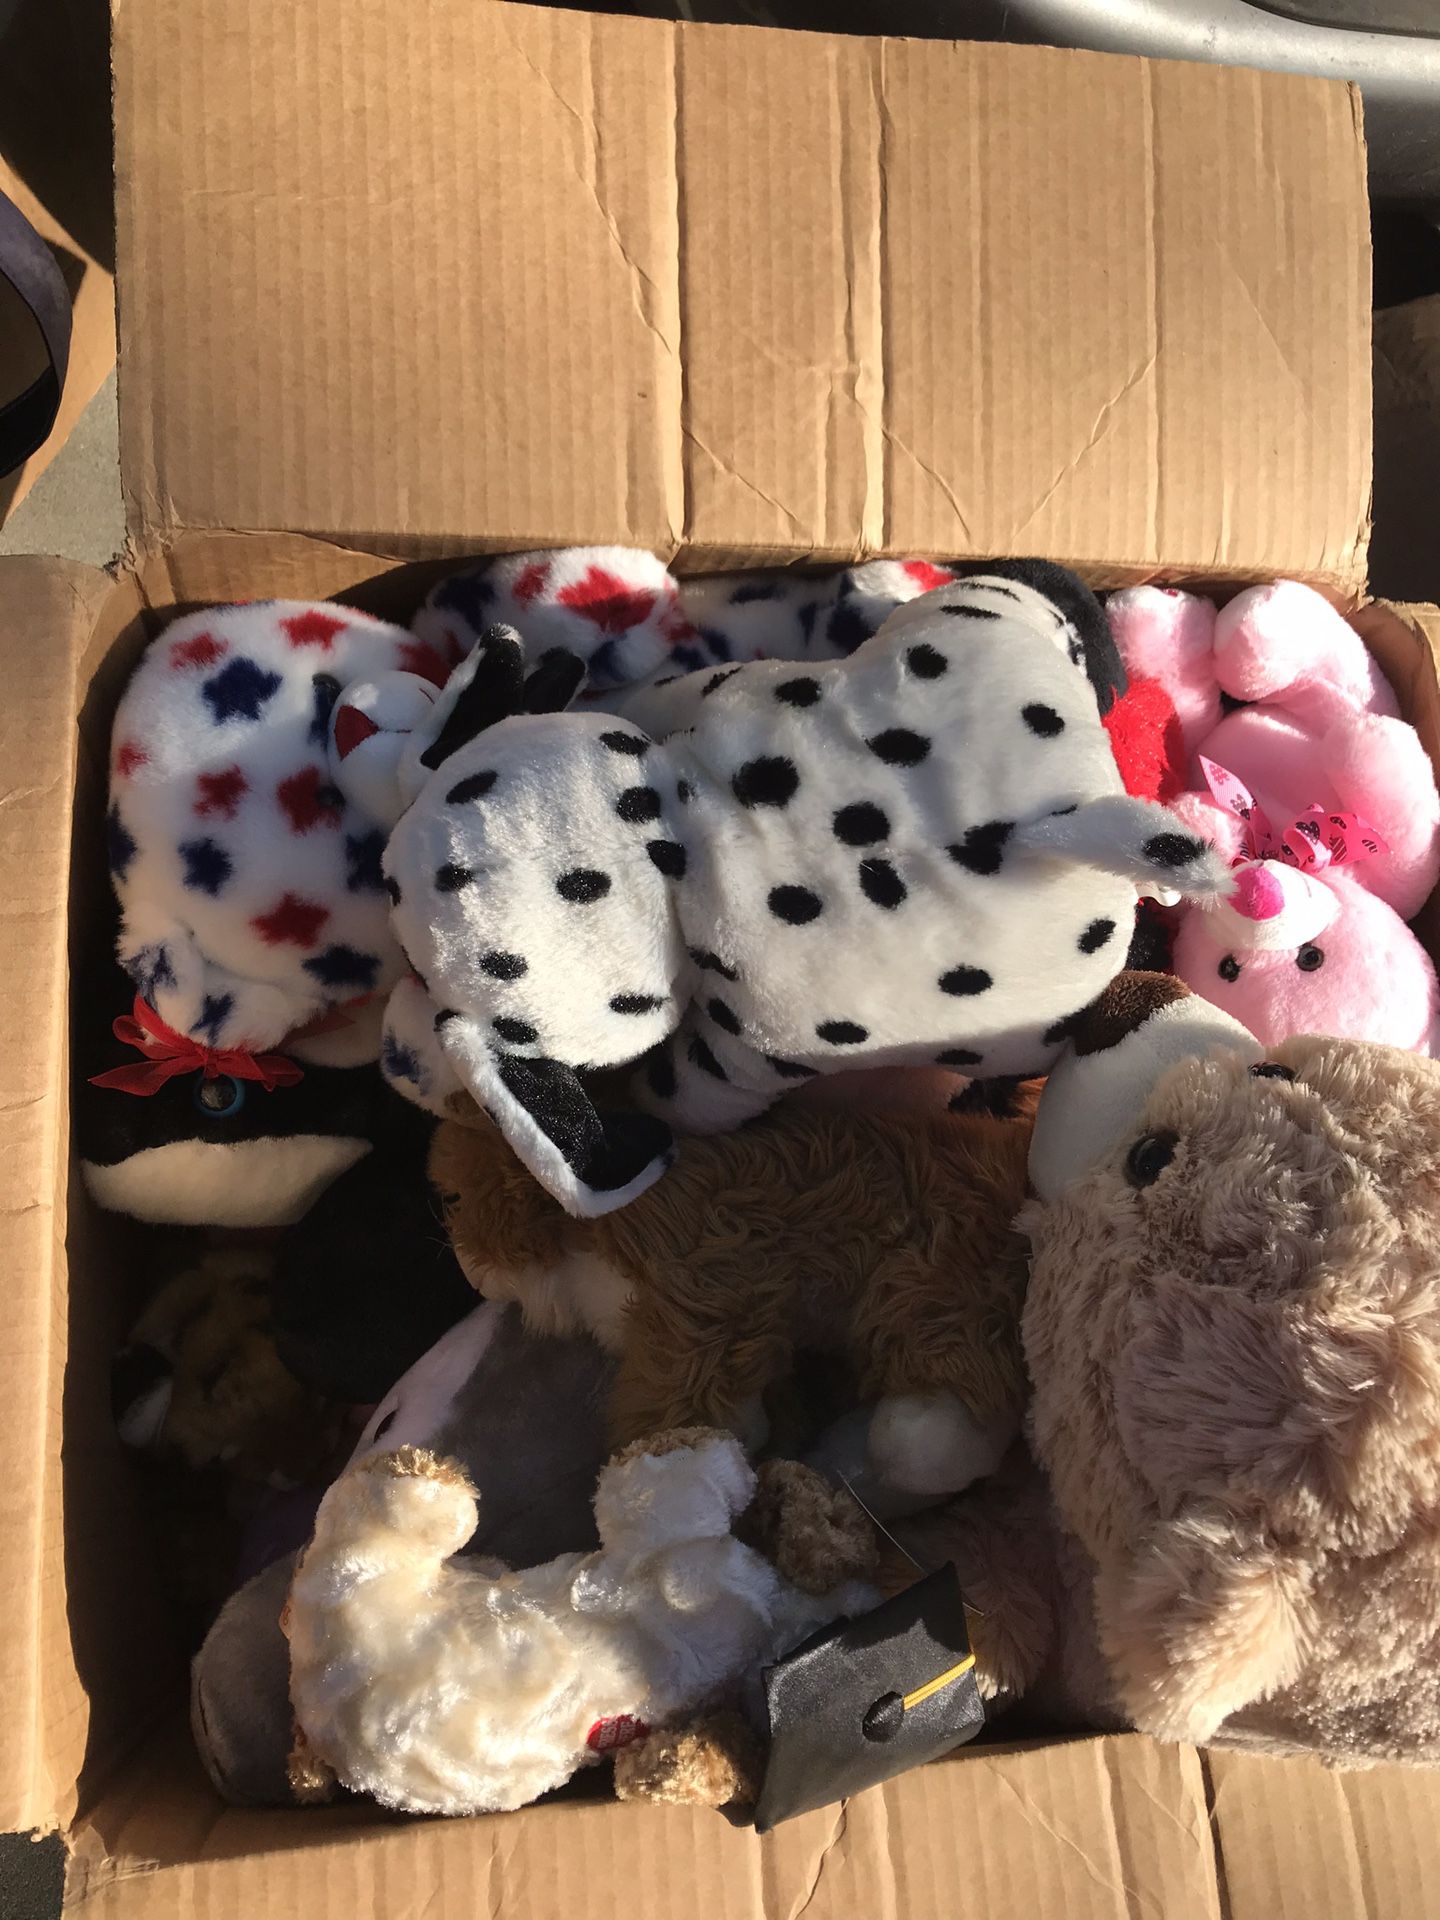 Big box of stuffed animals